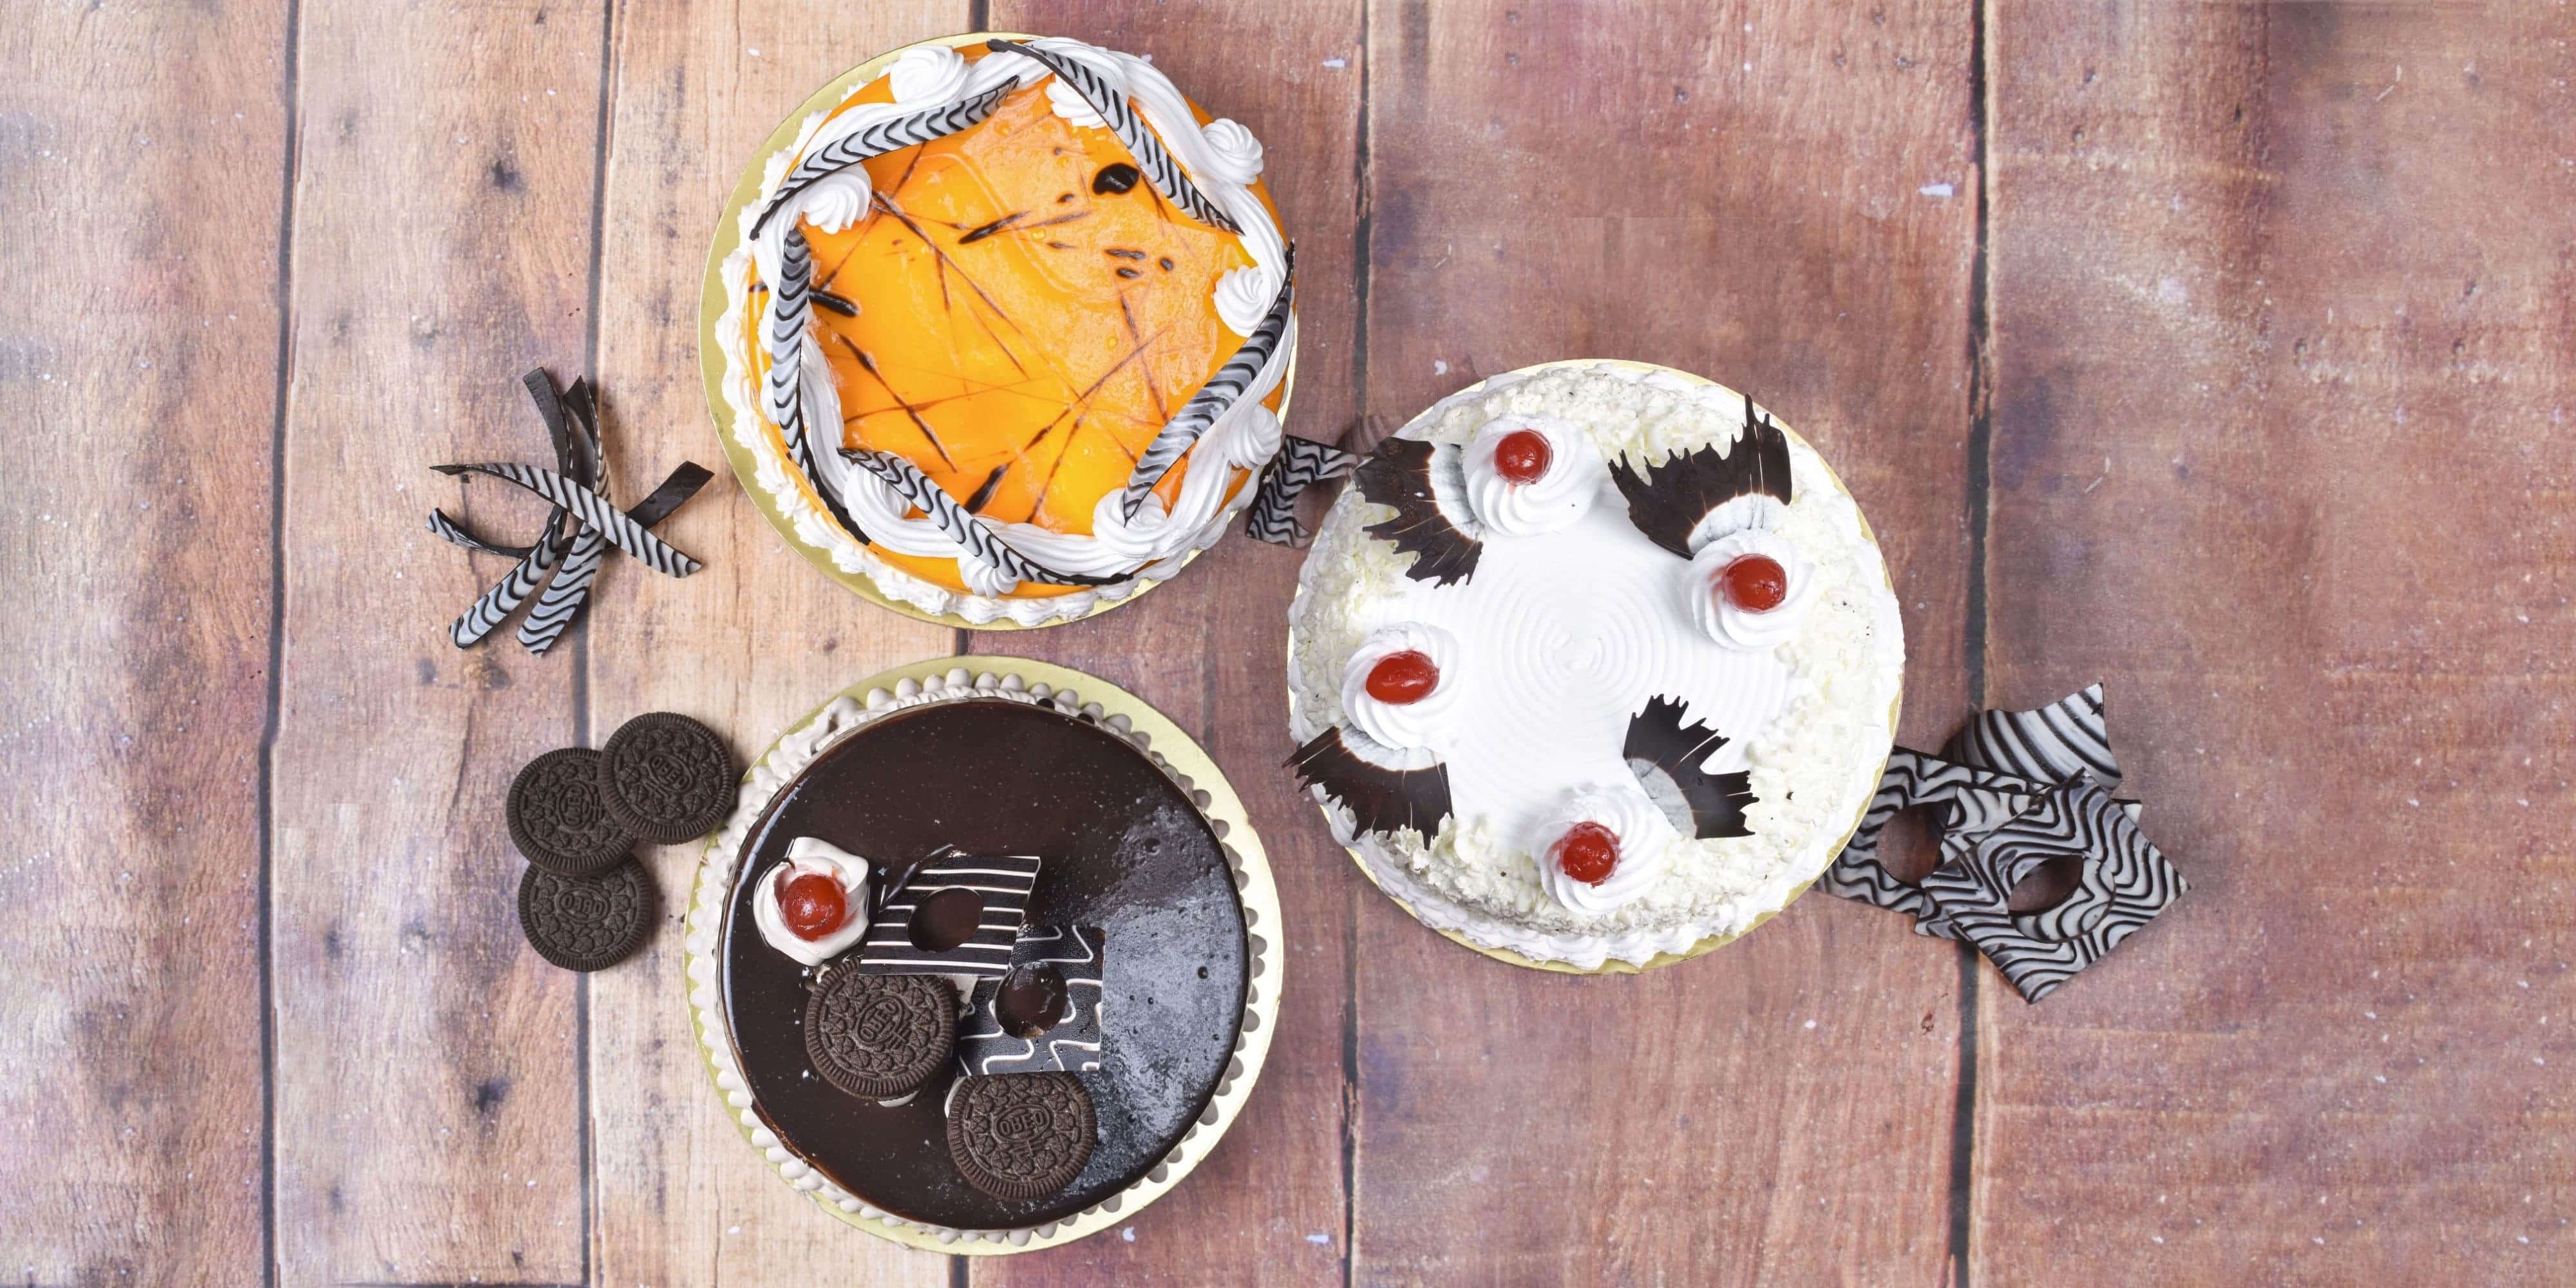 Monginis Cake Shop, Malvani, Malad West, Mumbai - Birthday Cake - Justdial